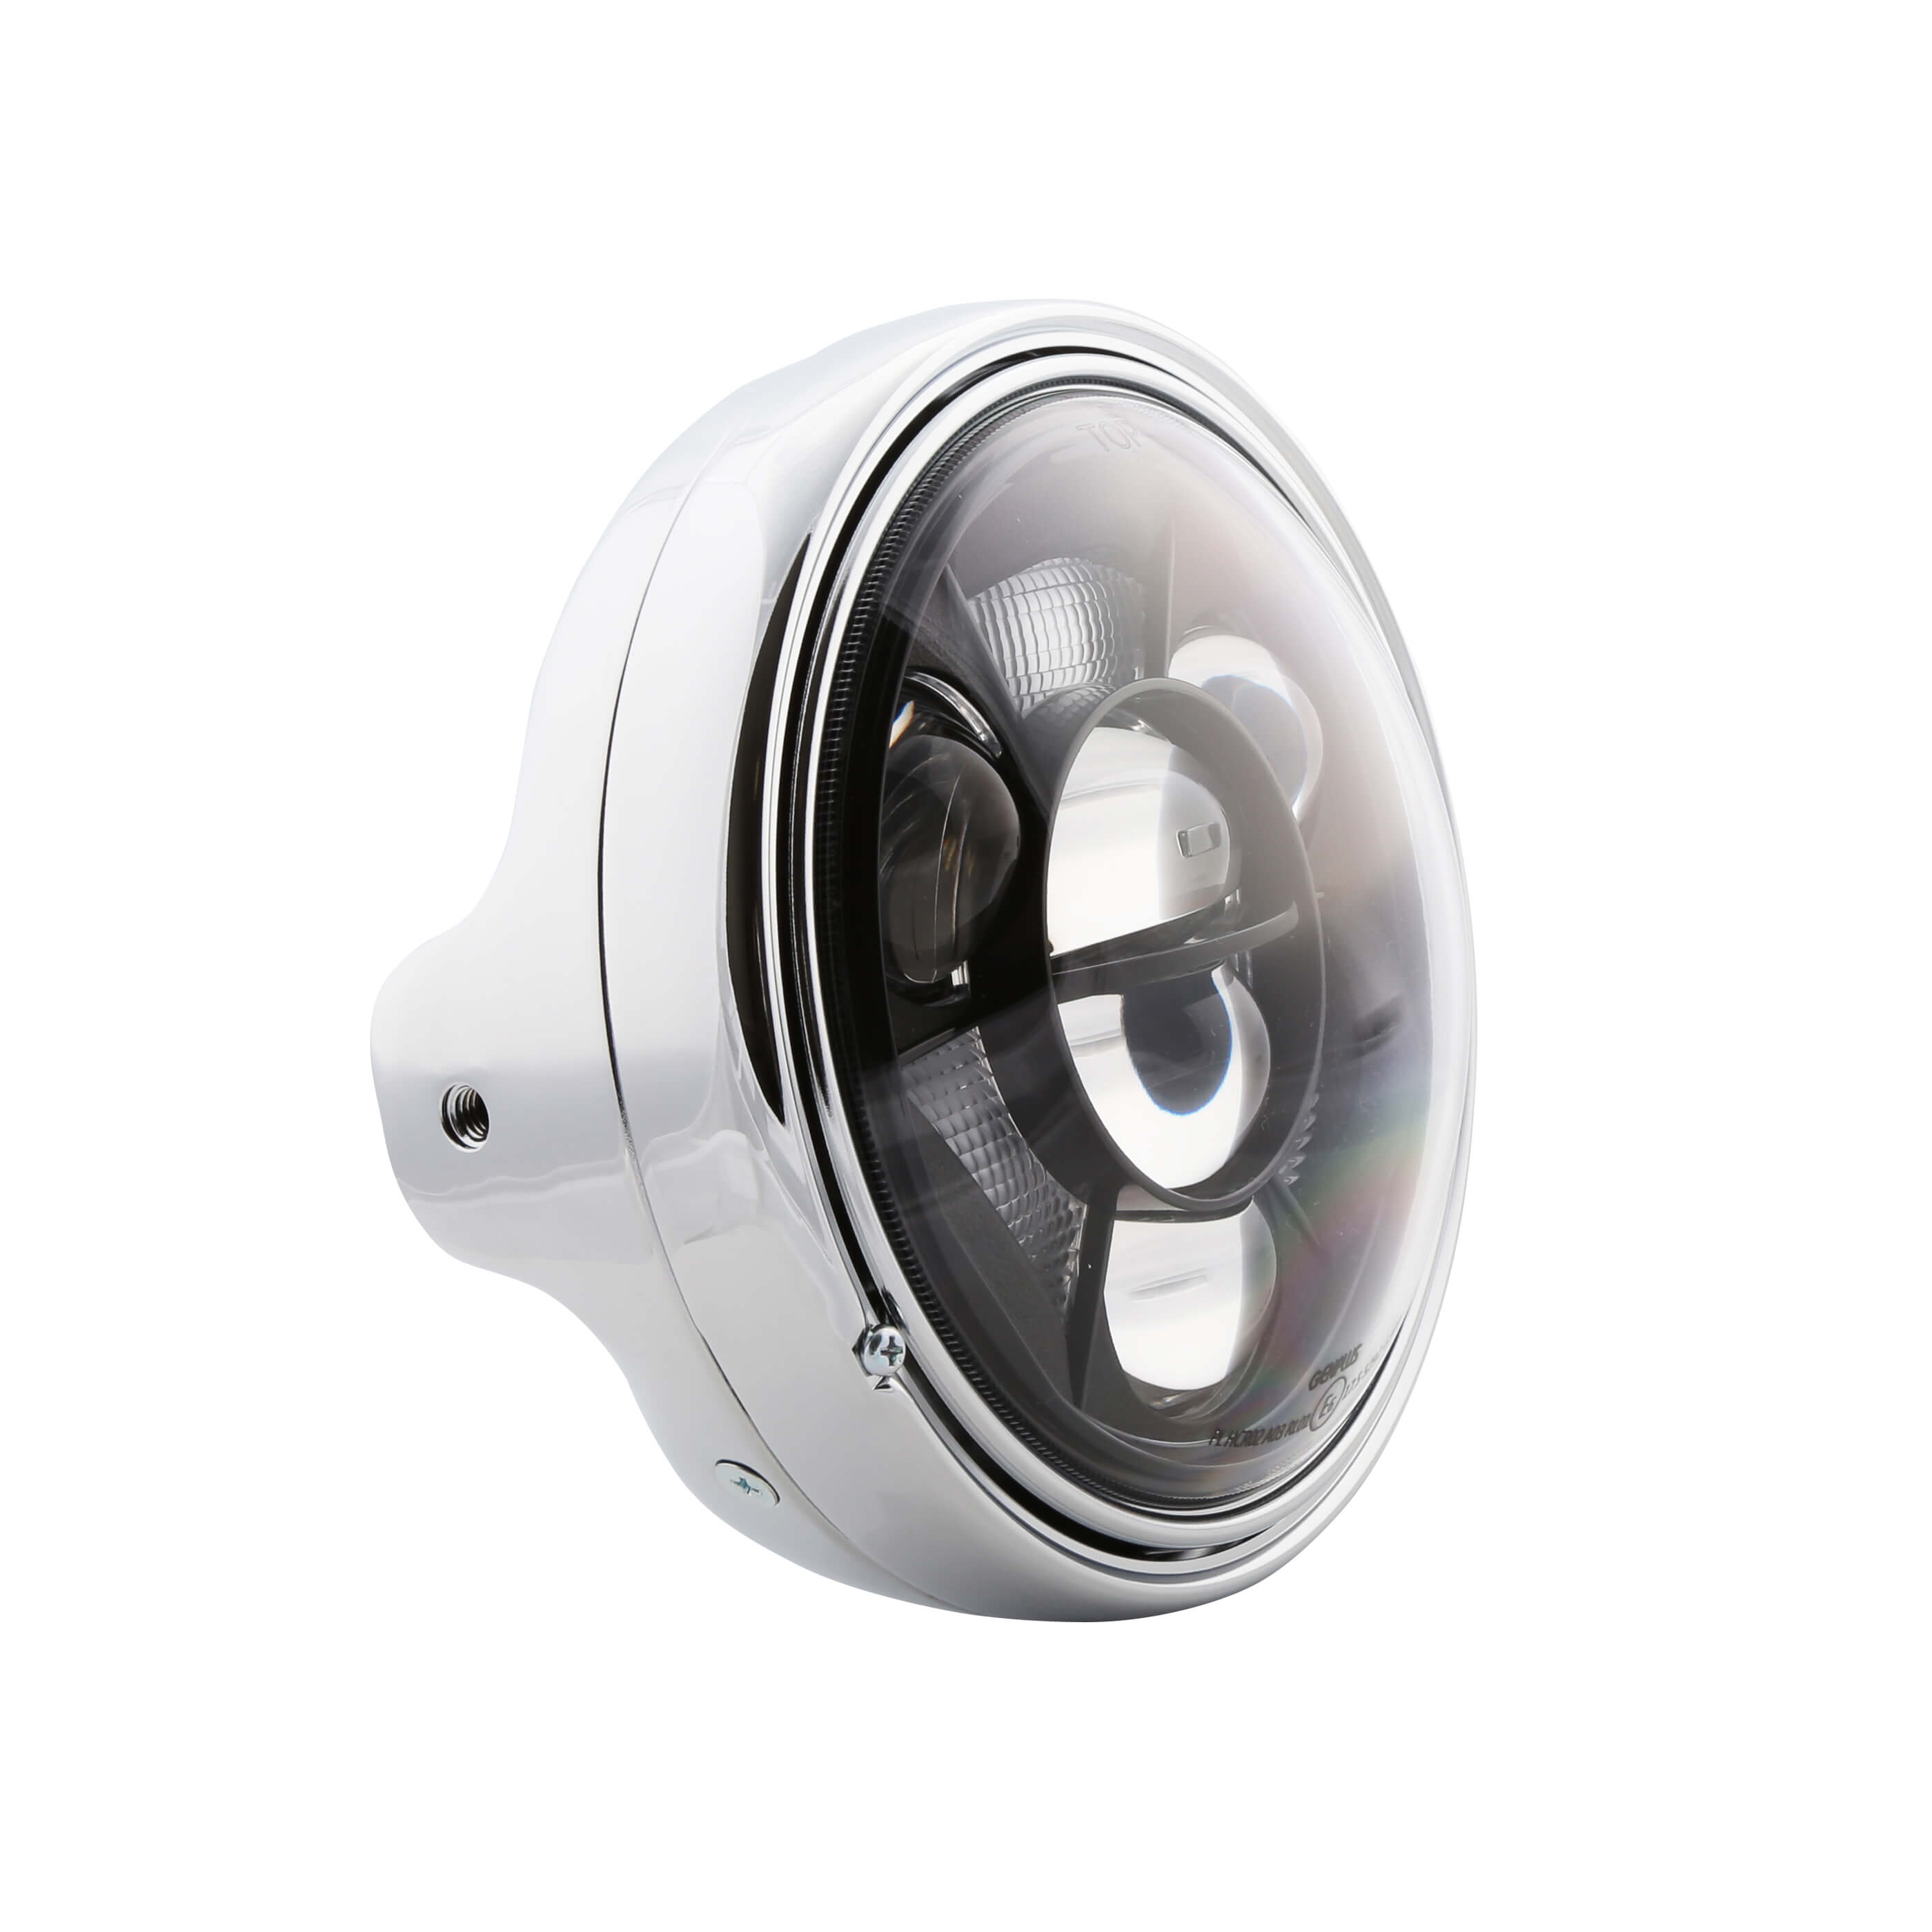 highsider LTD TYPE 11 7 inch LED headlight with TFL